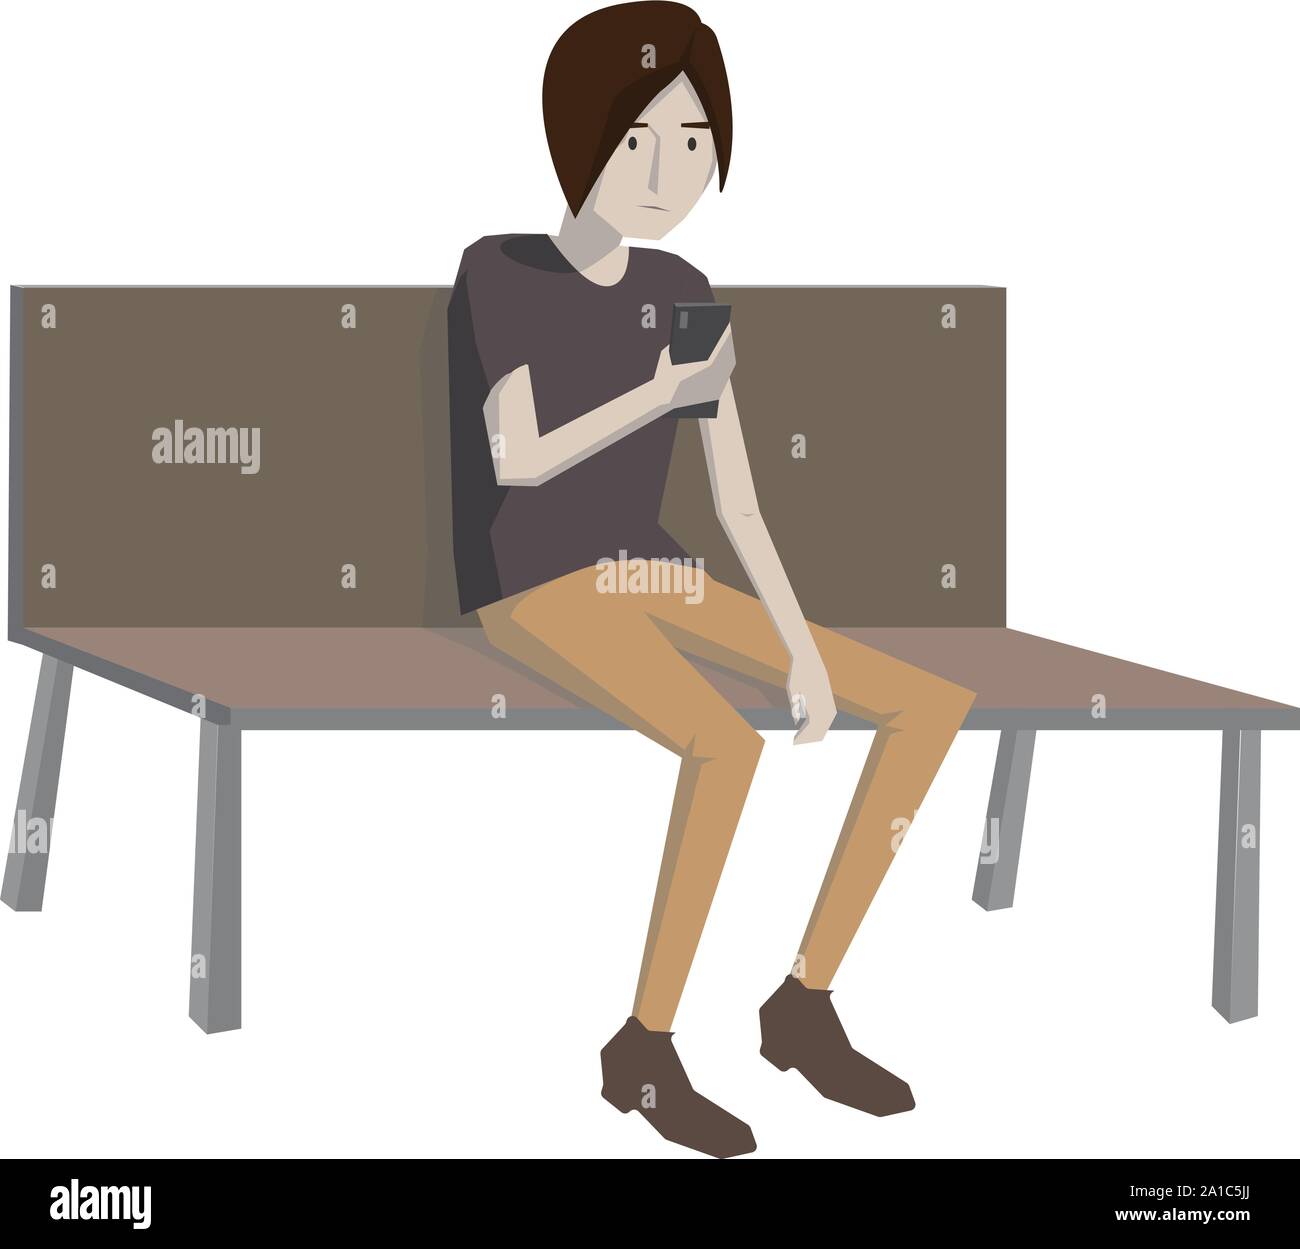 Sitting on bench, illustration, vector on white background. Stock Vector